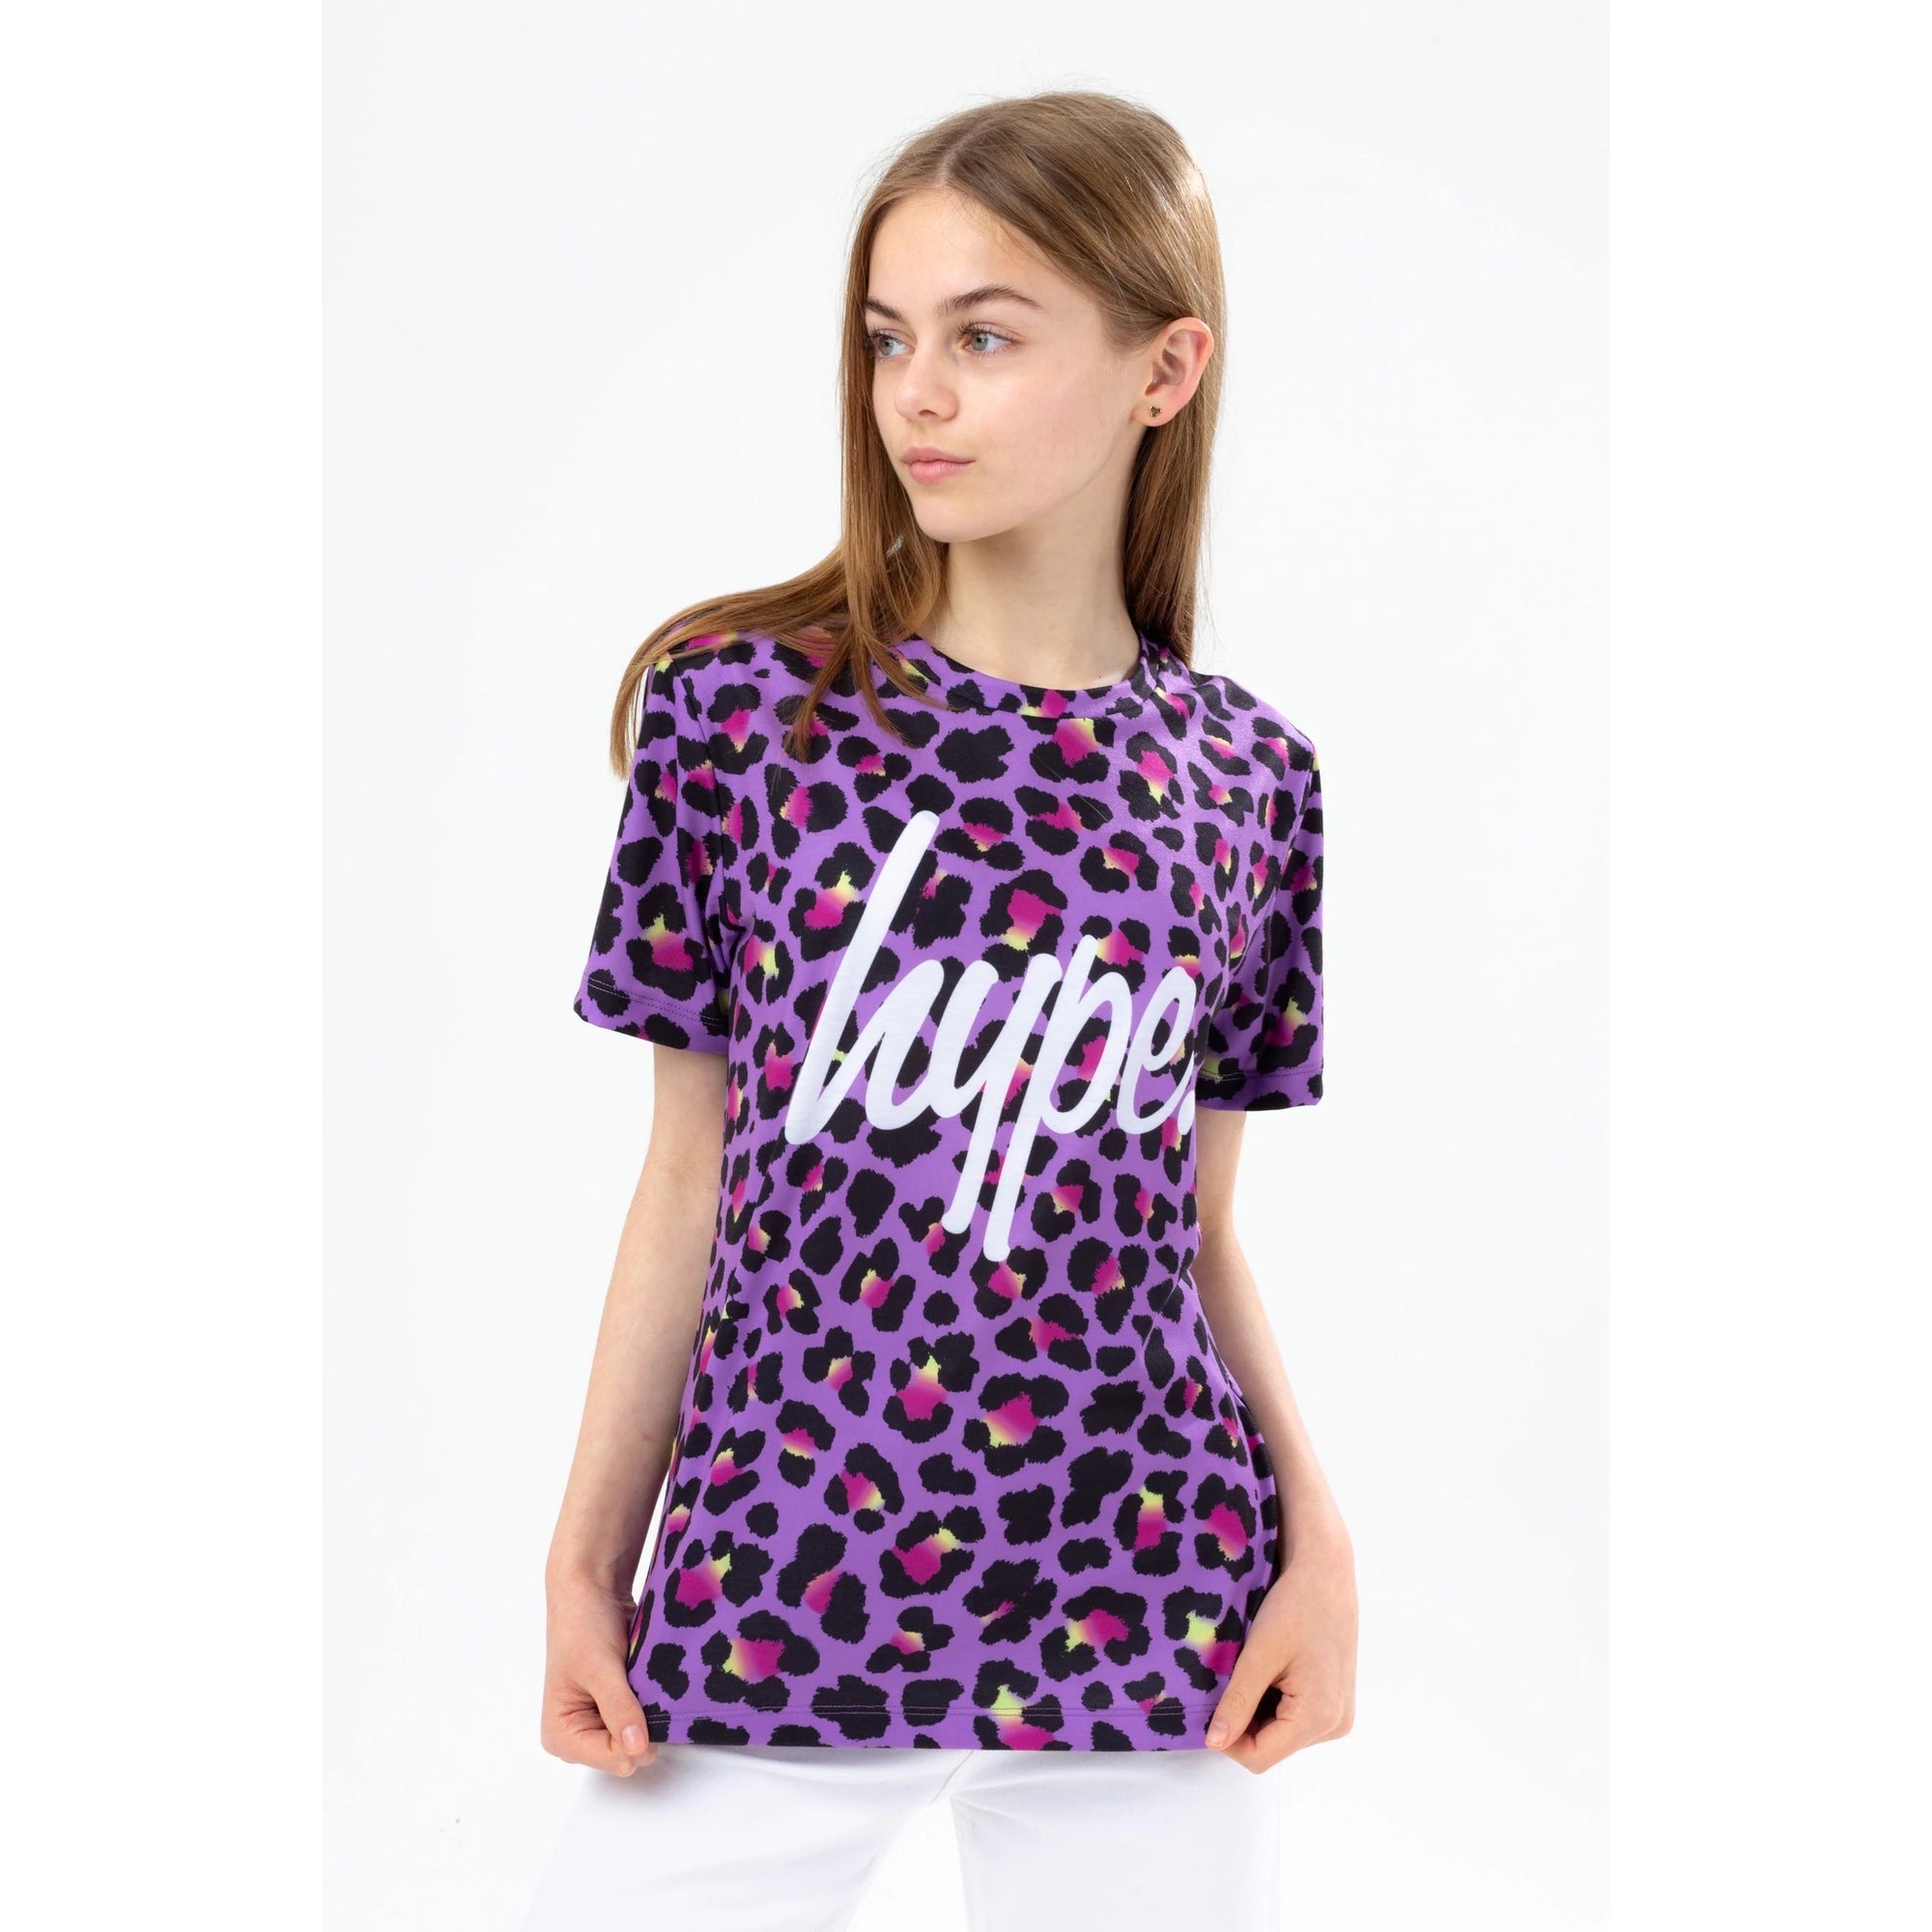 Hype Girls Funk Leopard T-Shirt Twlg-165 Clothing 9/10YRS / Purple,11/12YRS / Purple,13YRS / Purple,14YRS / Purple